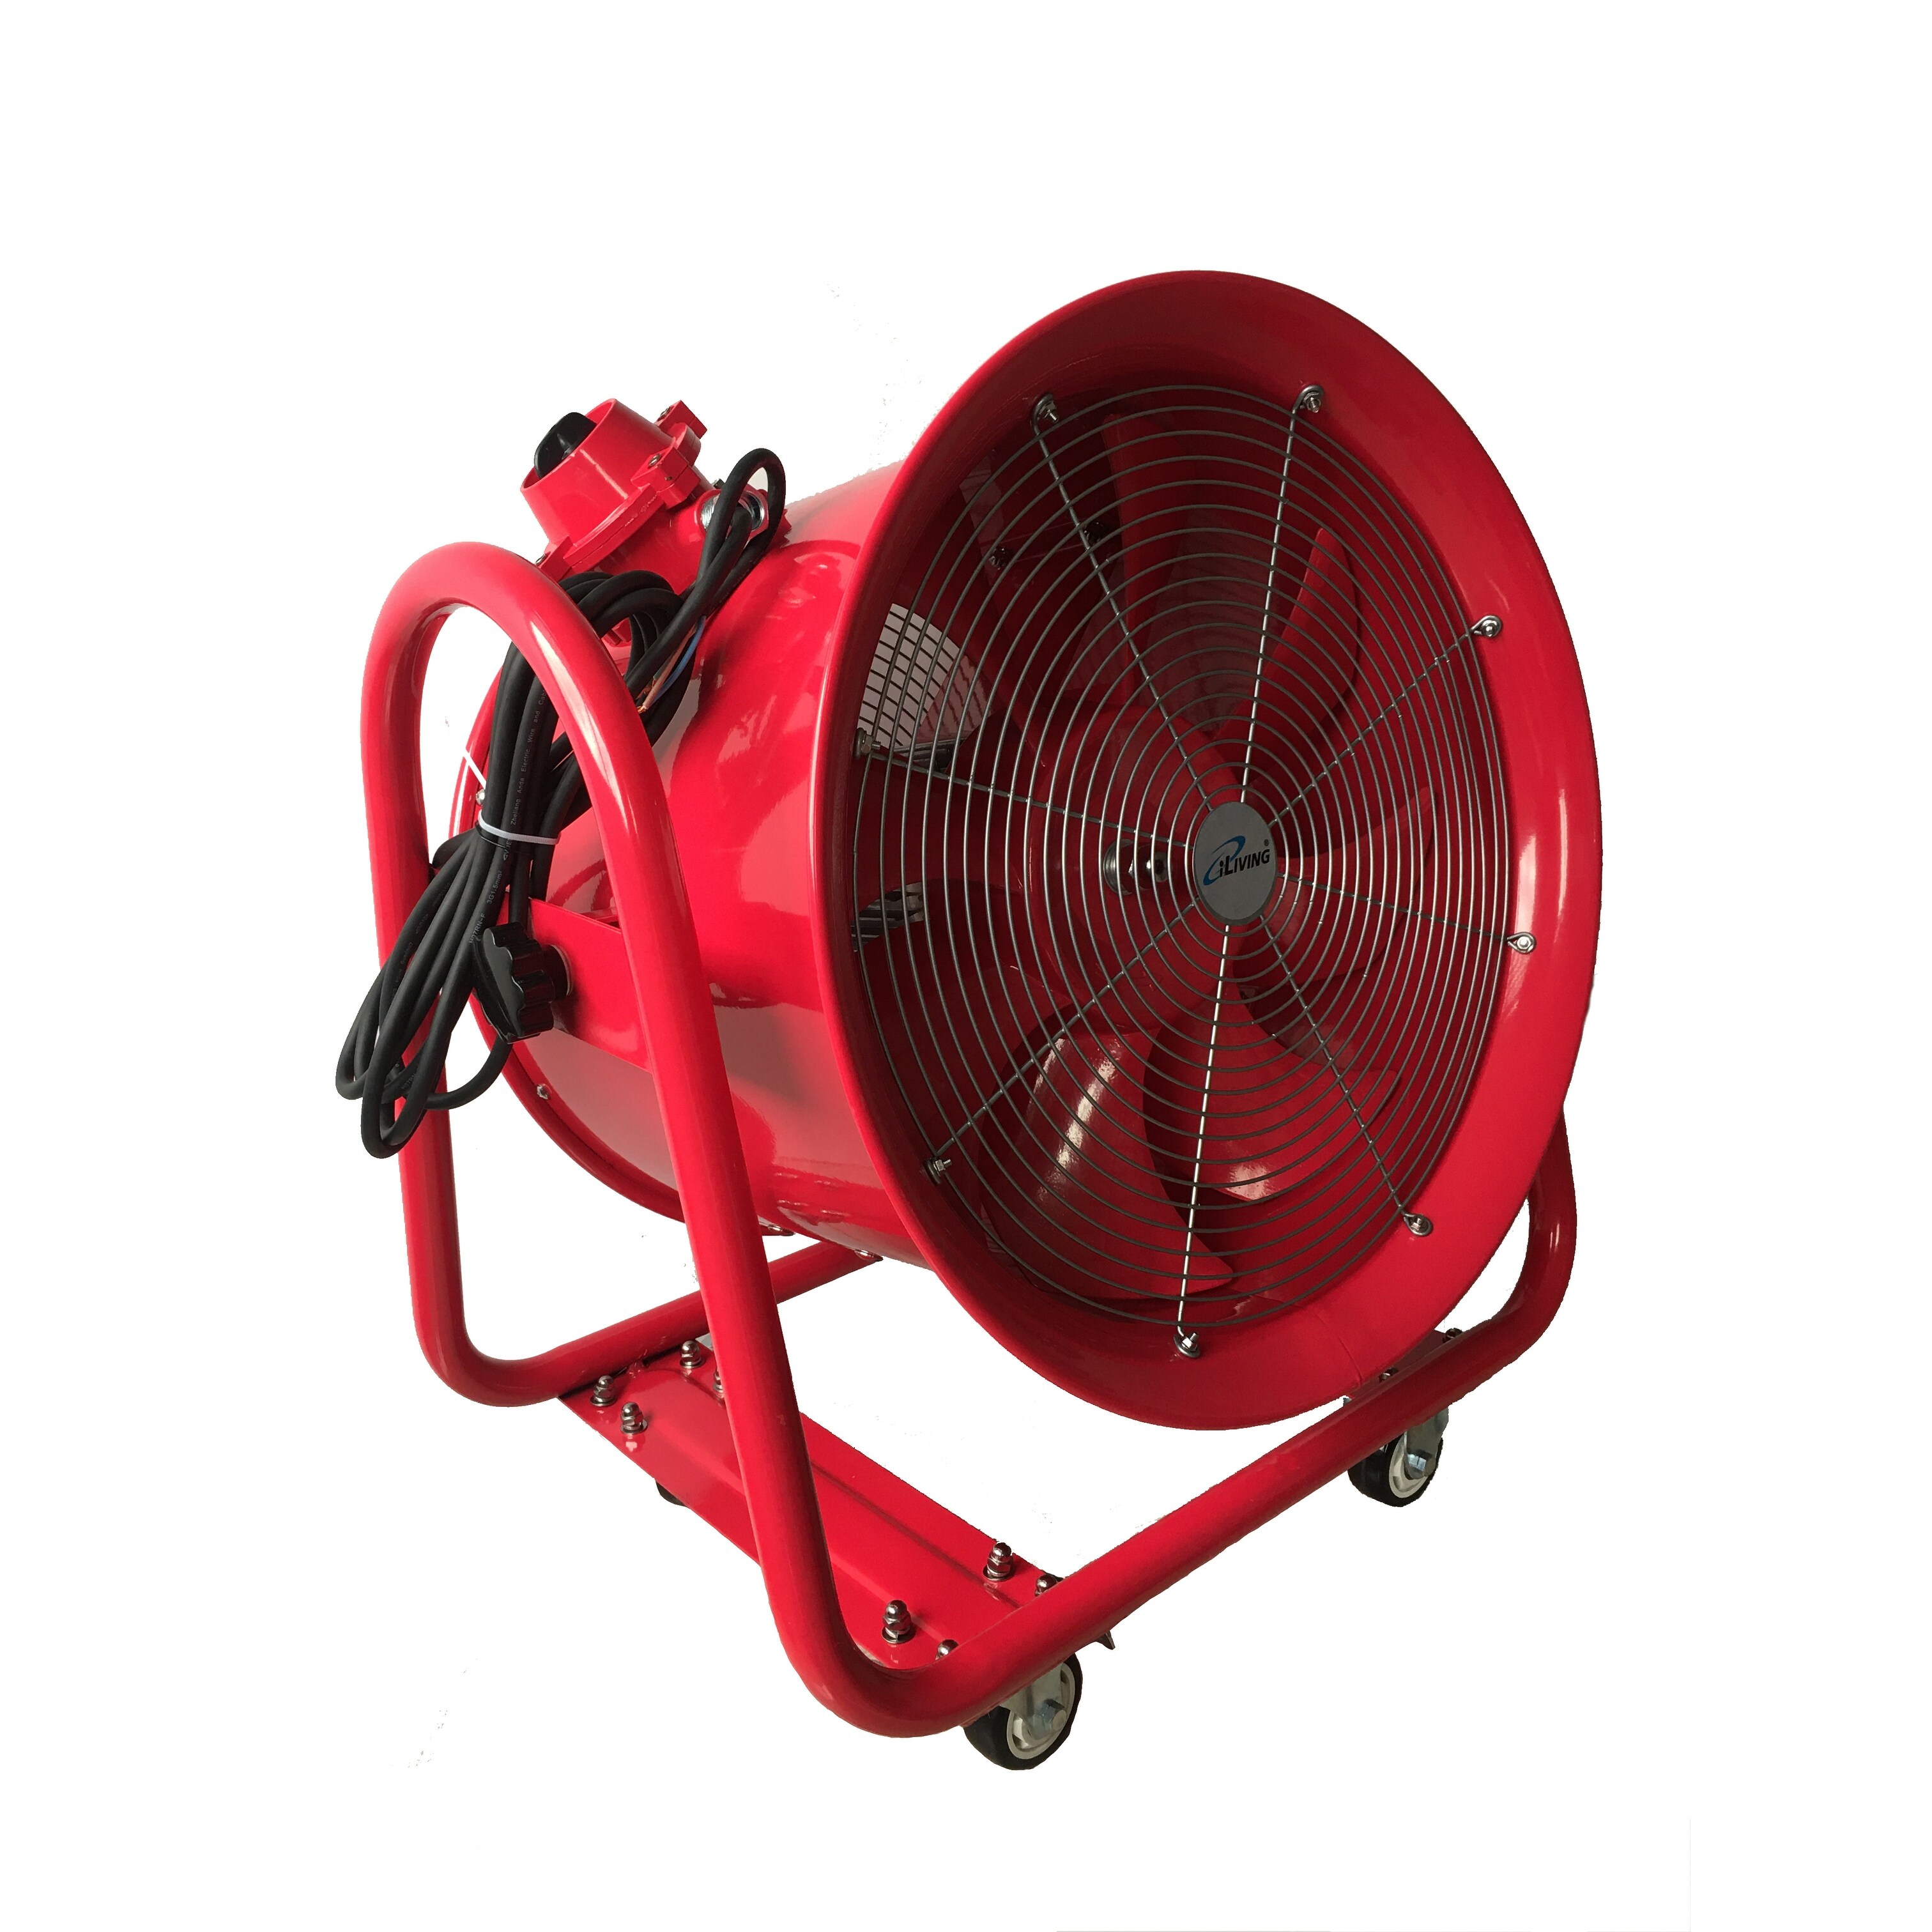 iLiving 20 in. Explosion Proof Ventilation Fan, 900W, 5830 CFM, Red, ILG8EF20EX